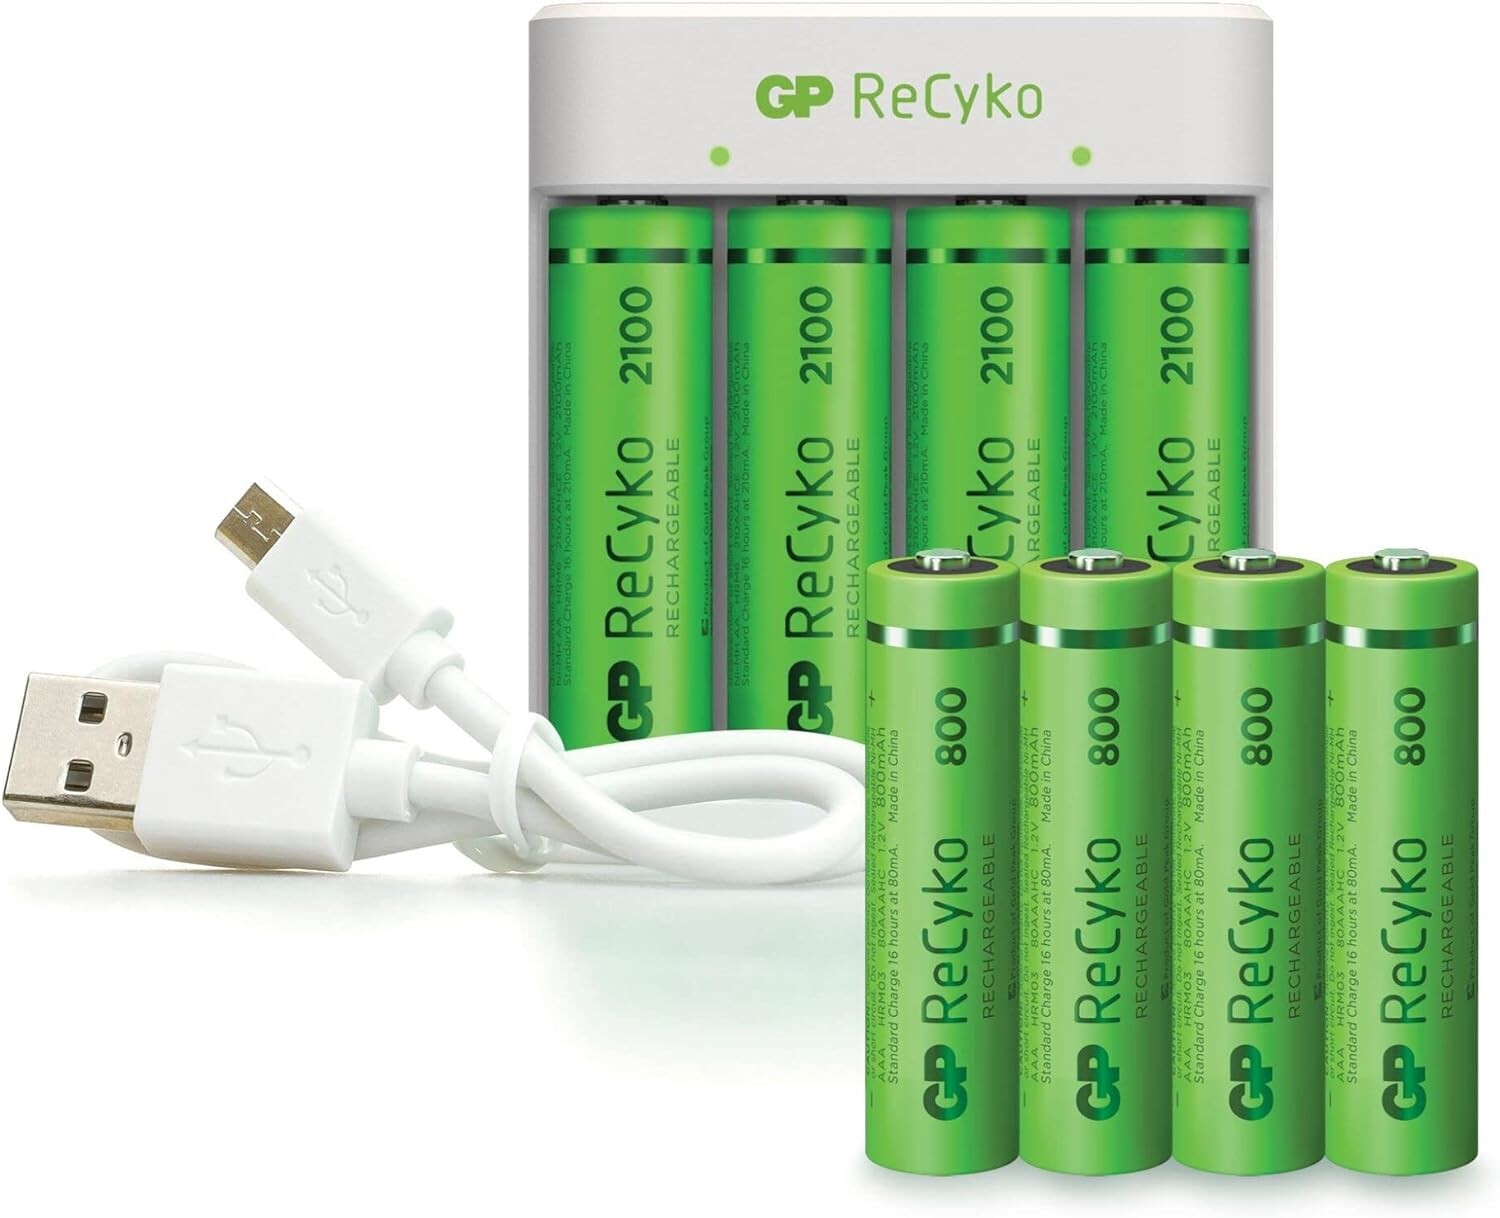 Piles rechargeables AAA, 4 ReCyko Pro, 800 mAh